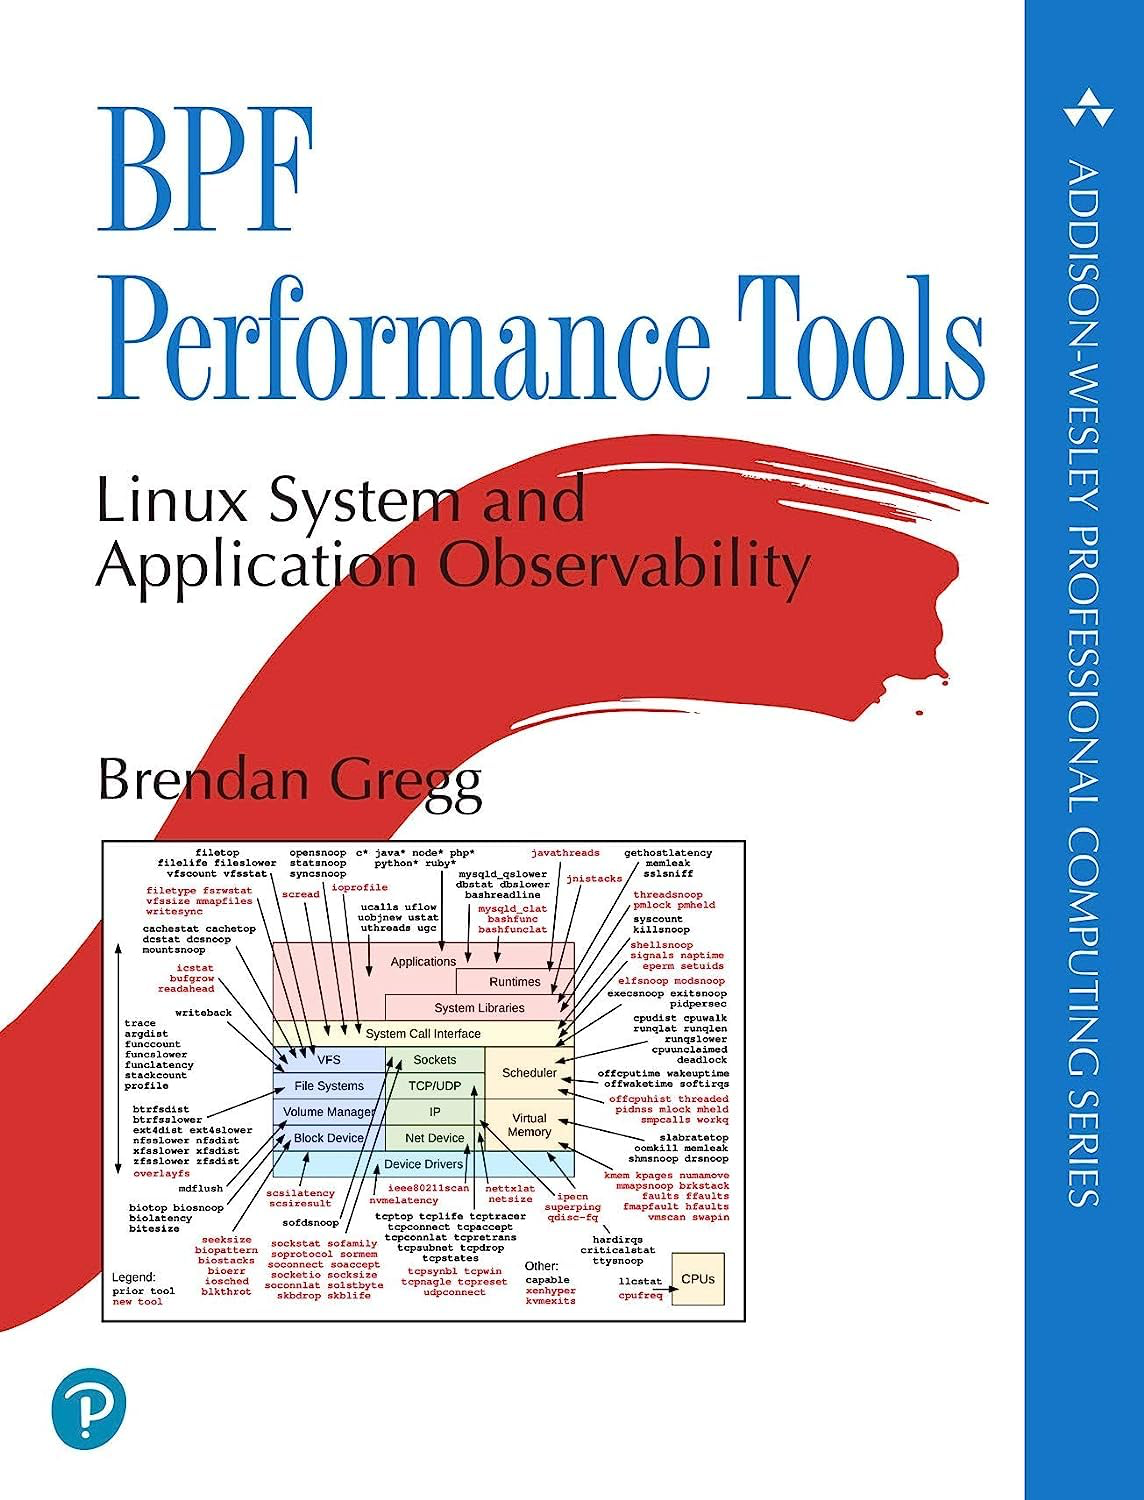 BPF Performance Tools Review